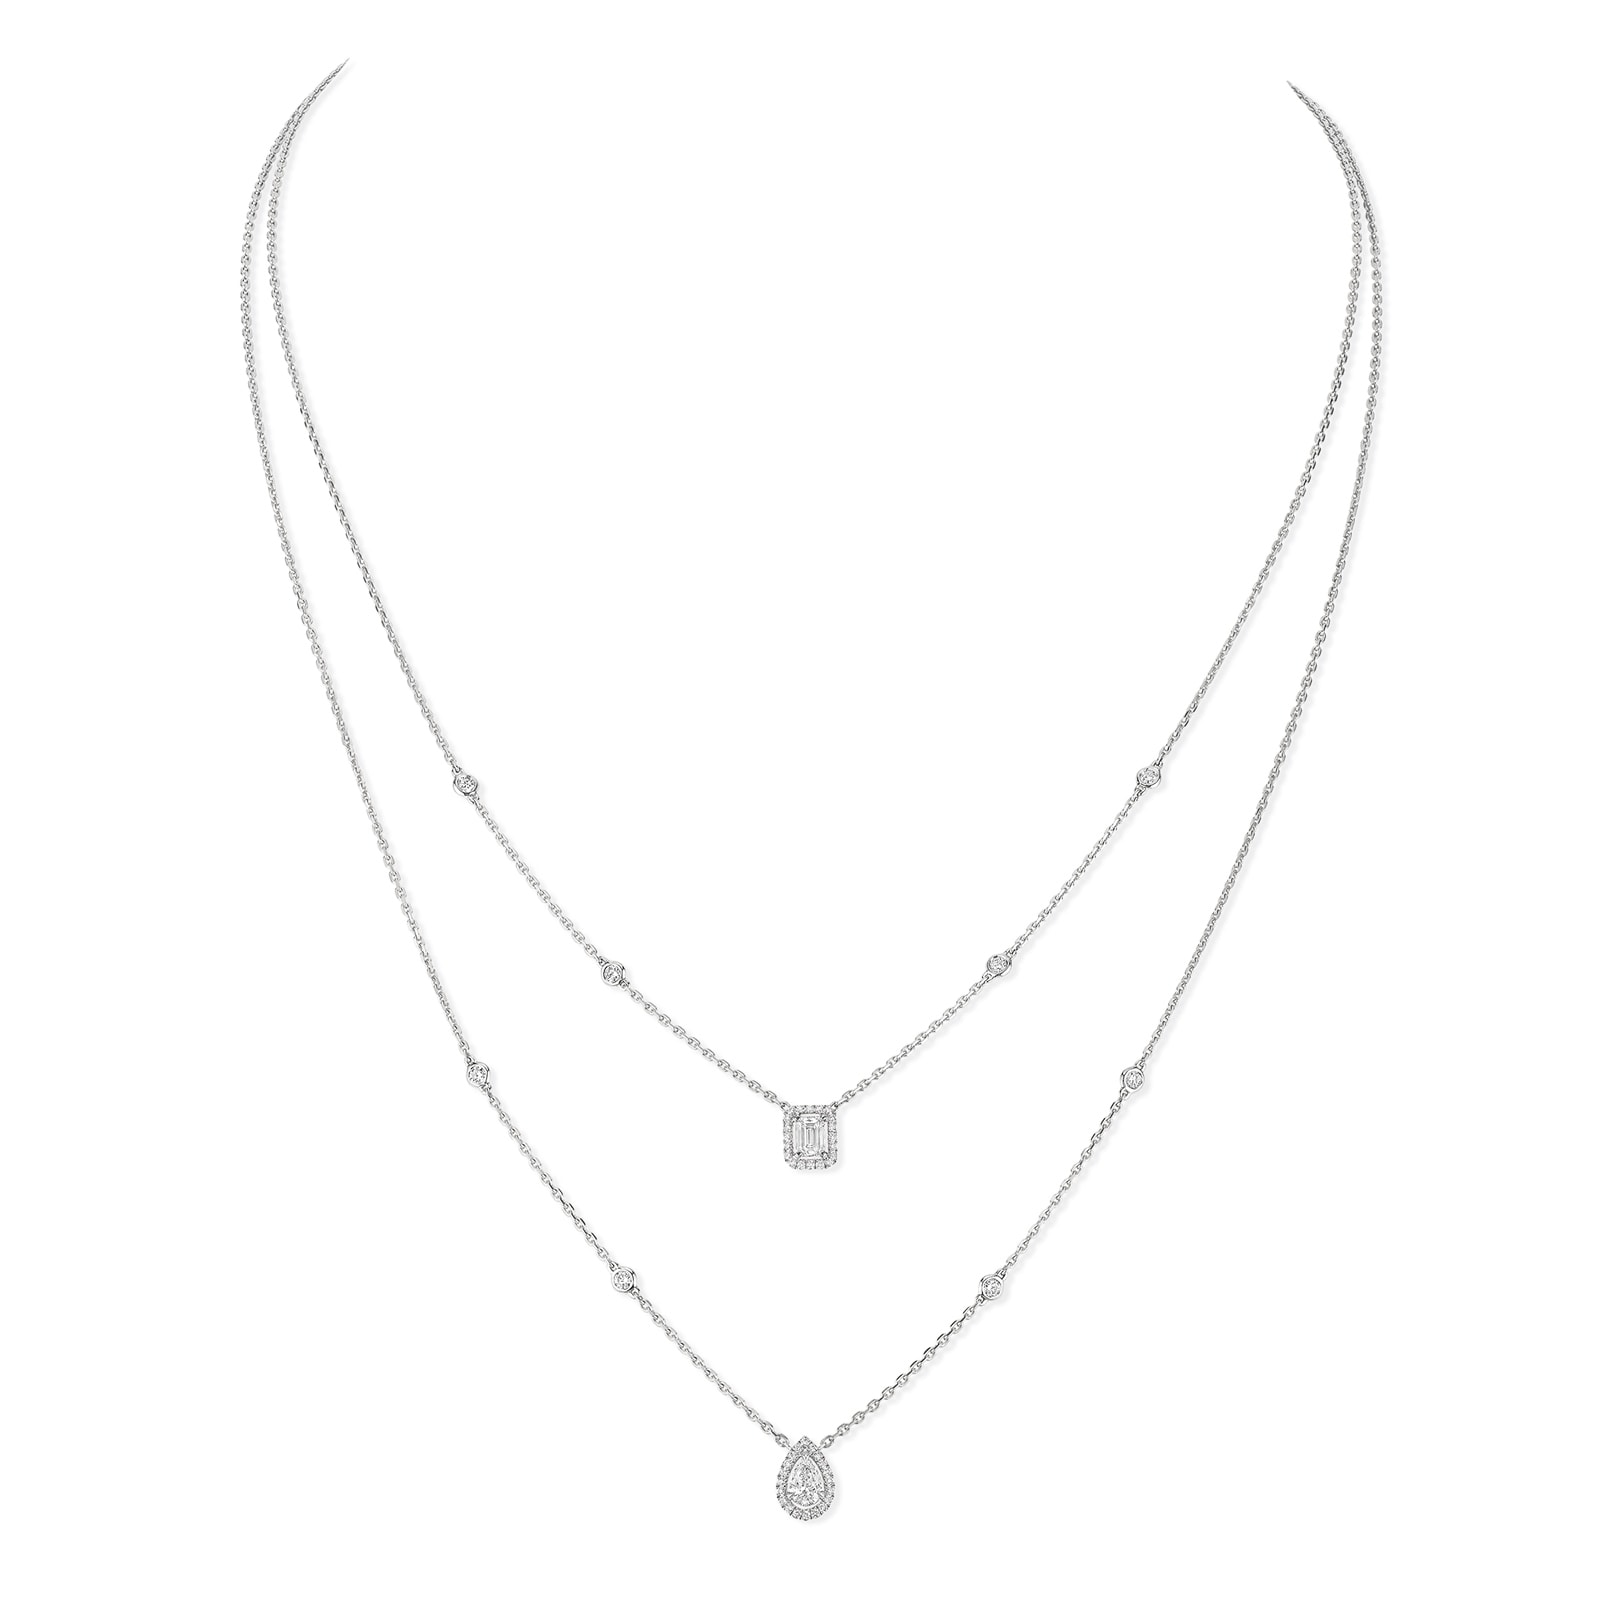 My Twin 2-Row 0.76cttw Diamond Necklace